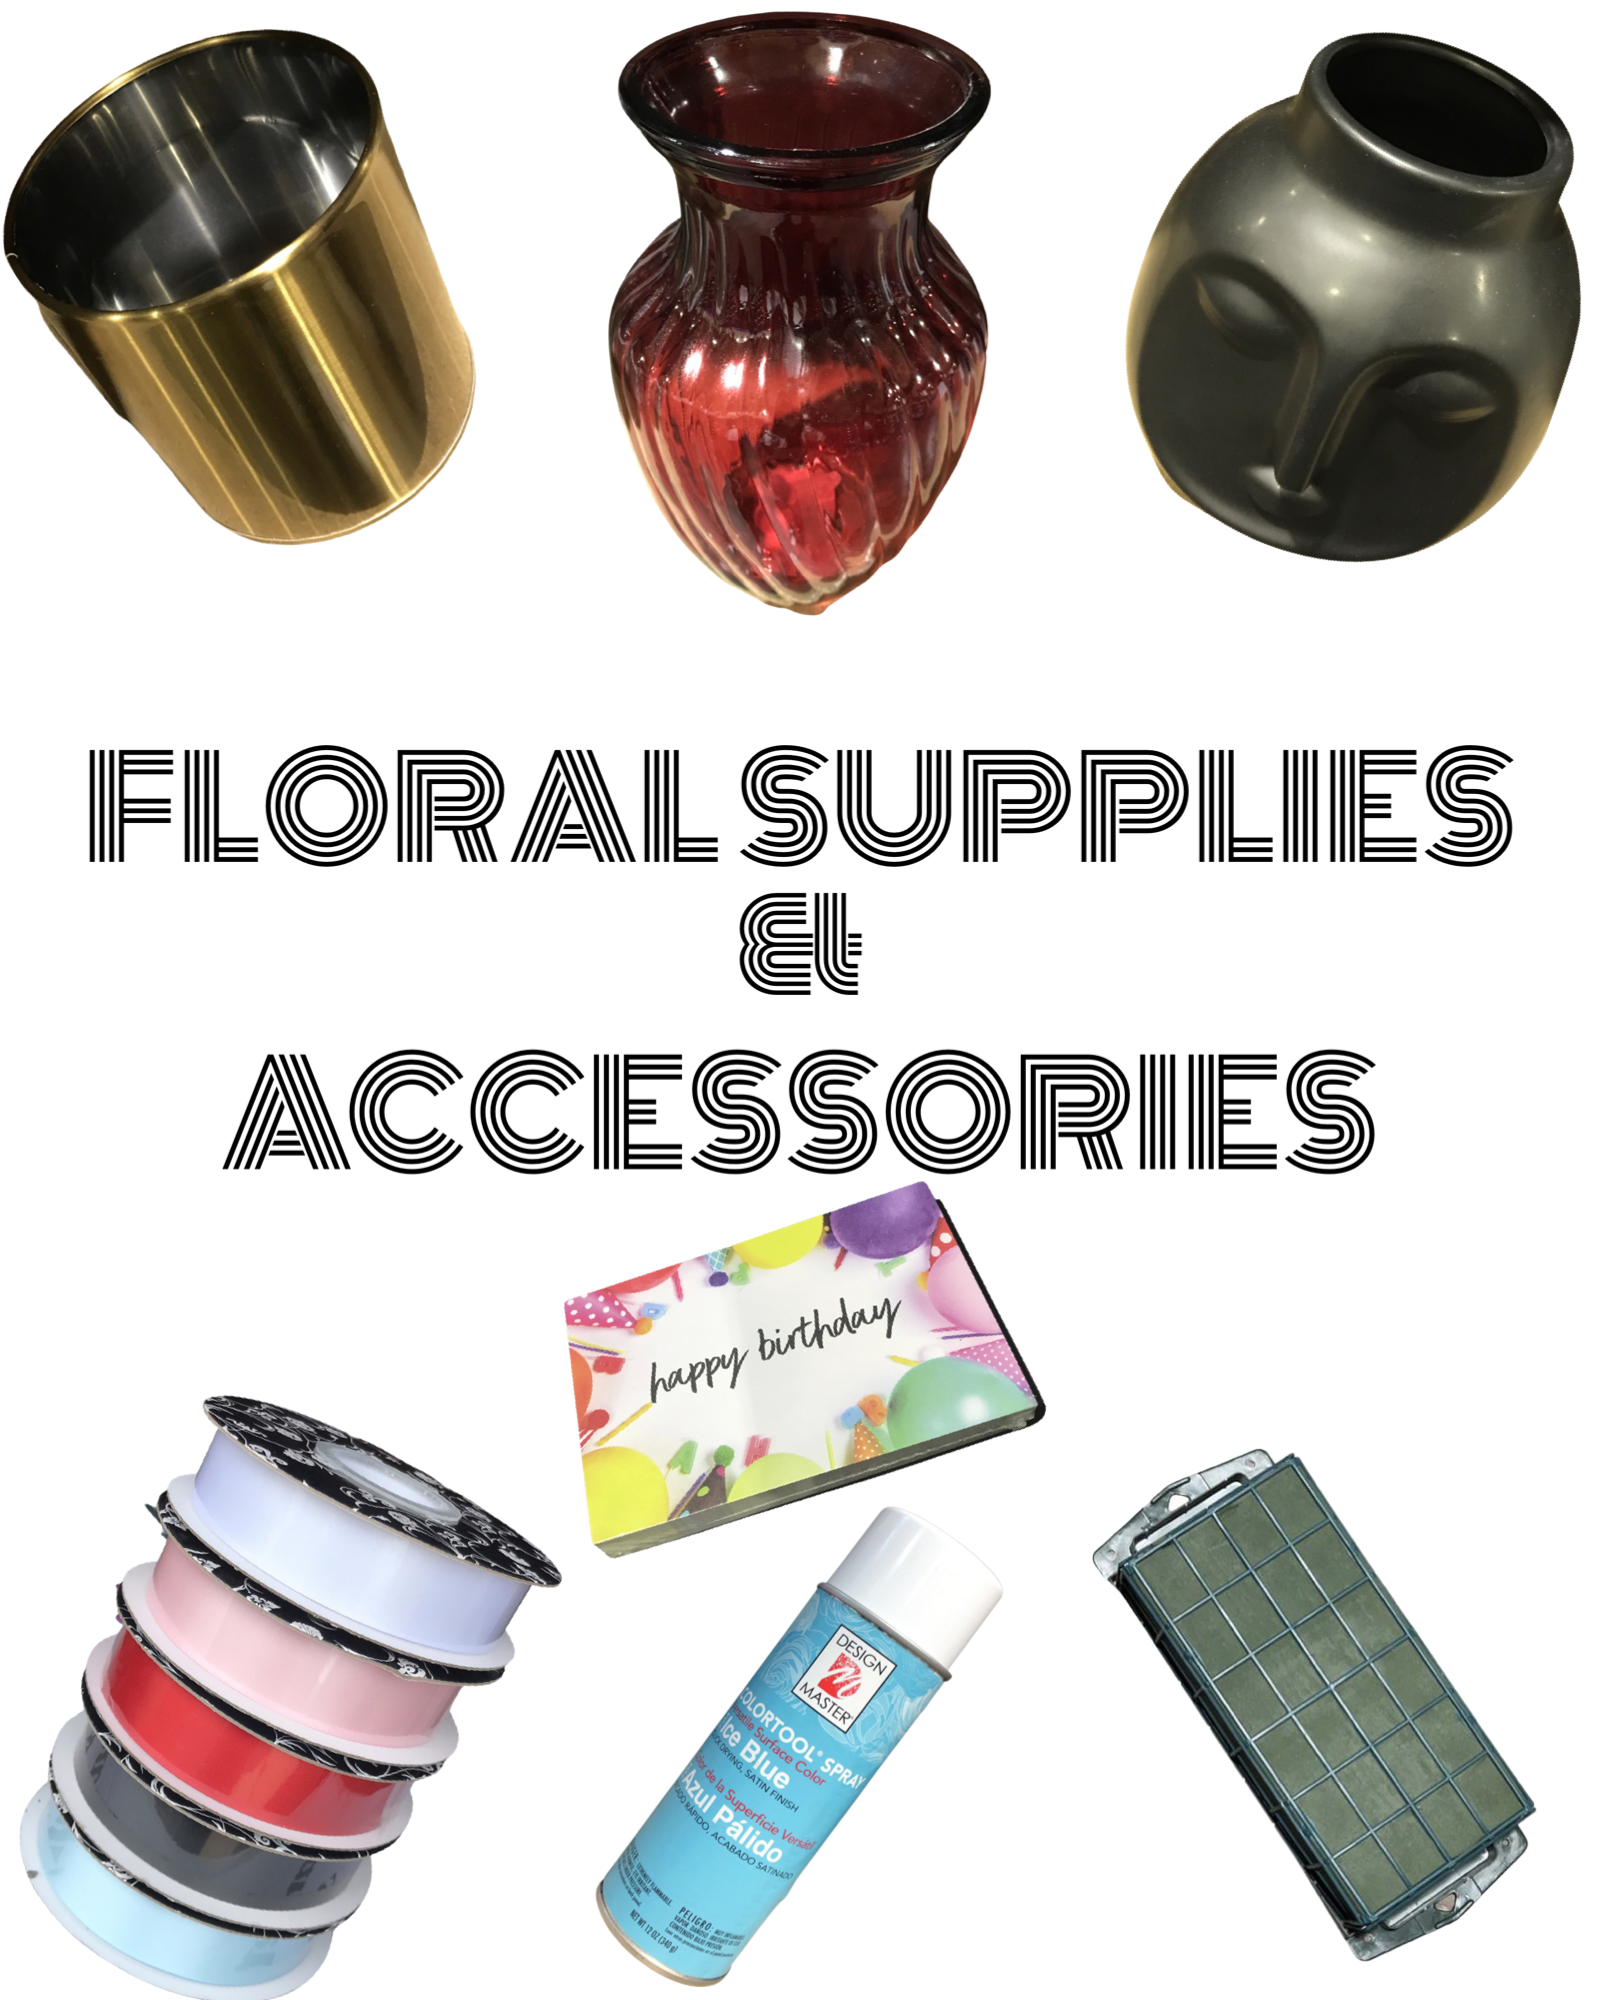 Floral Supplies & Accessories